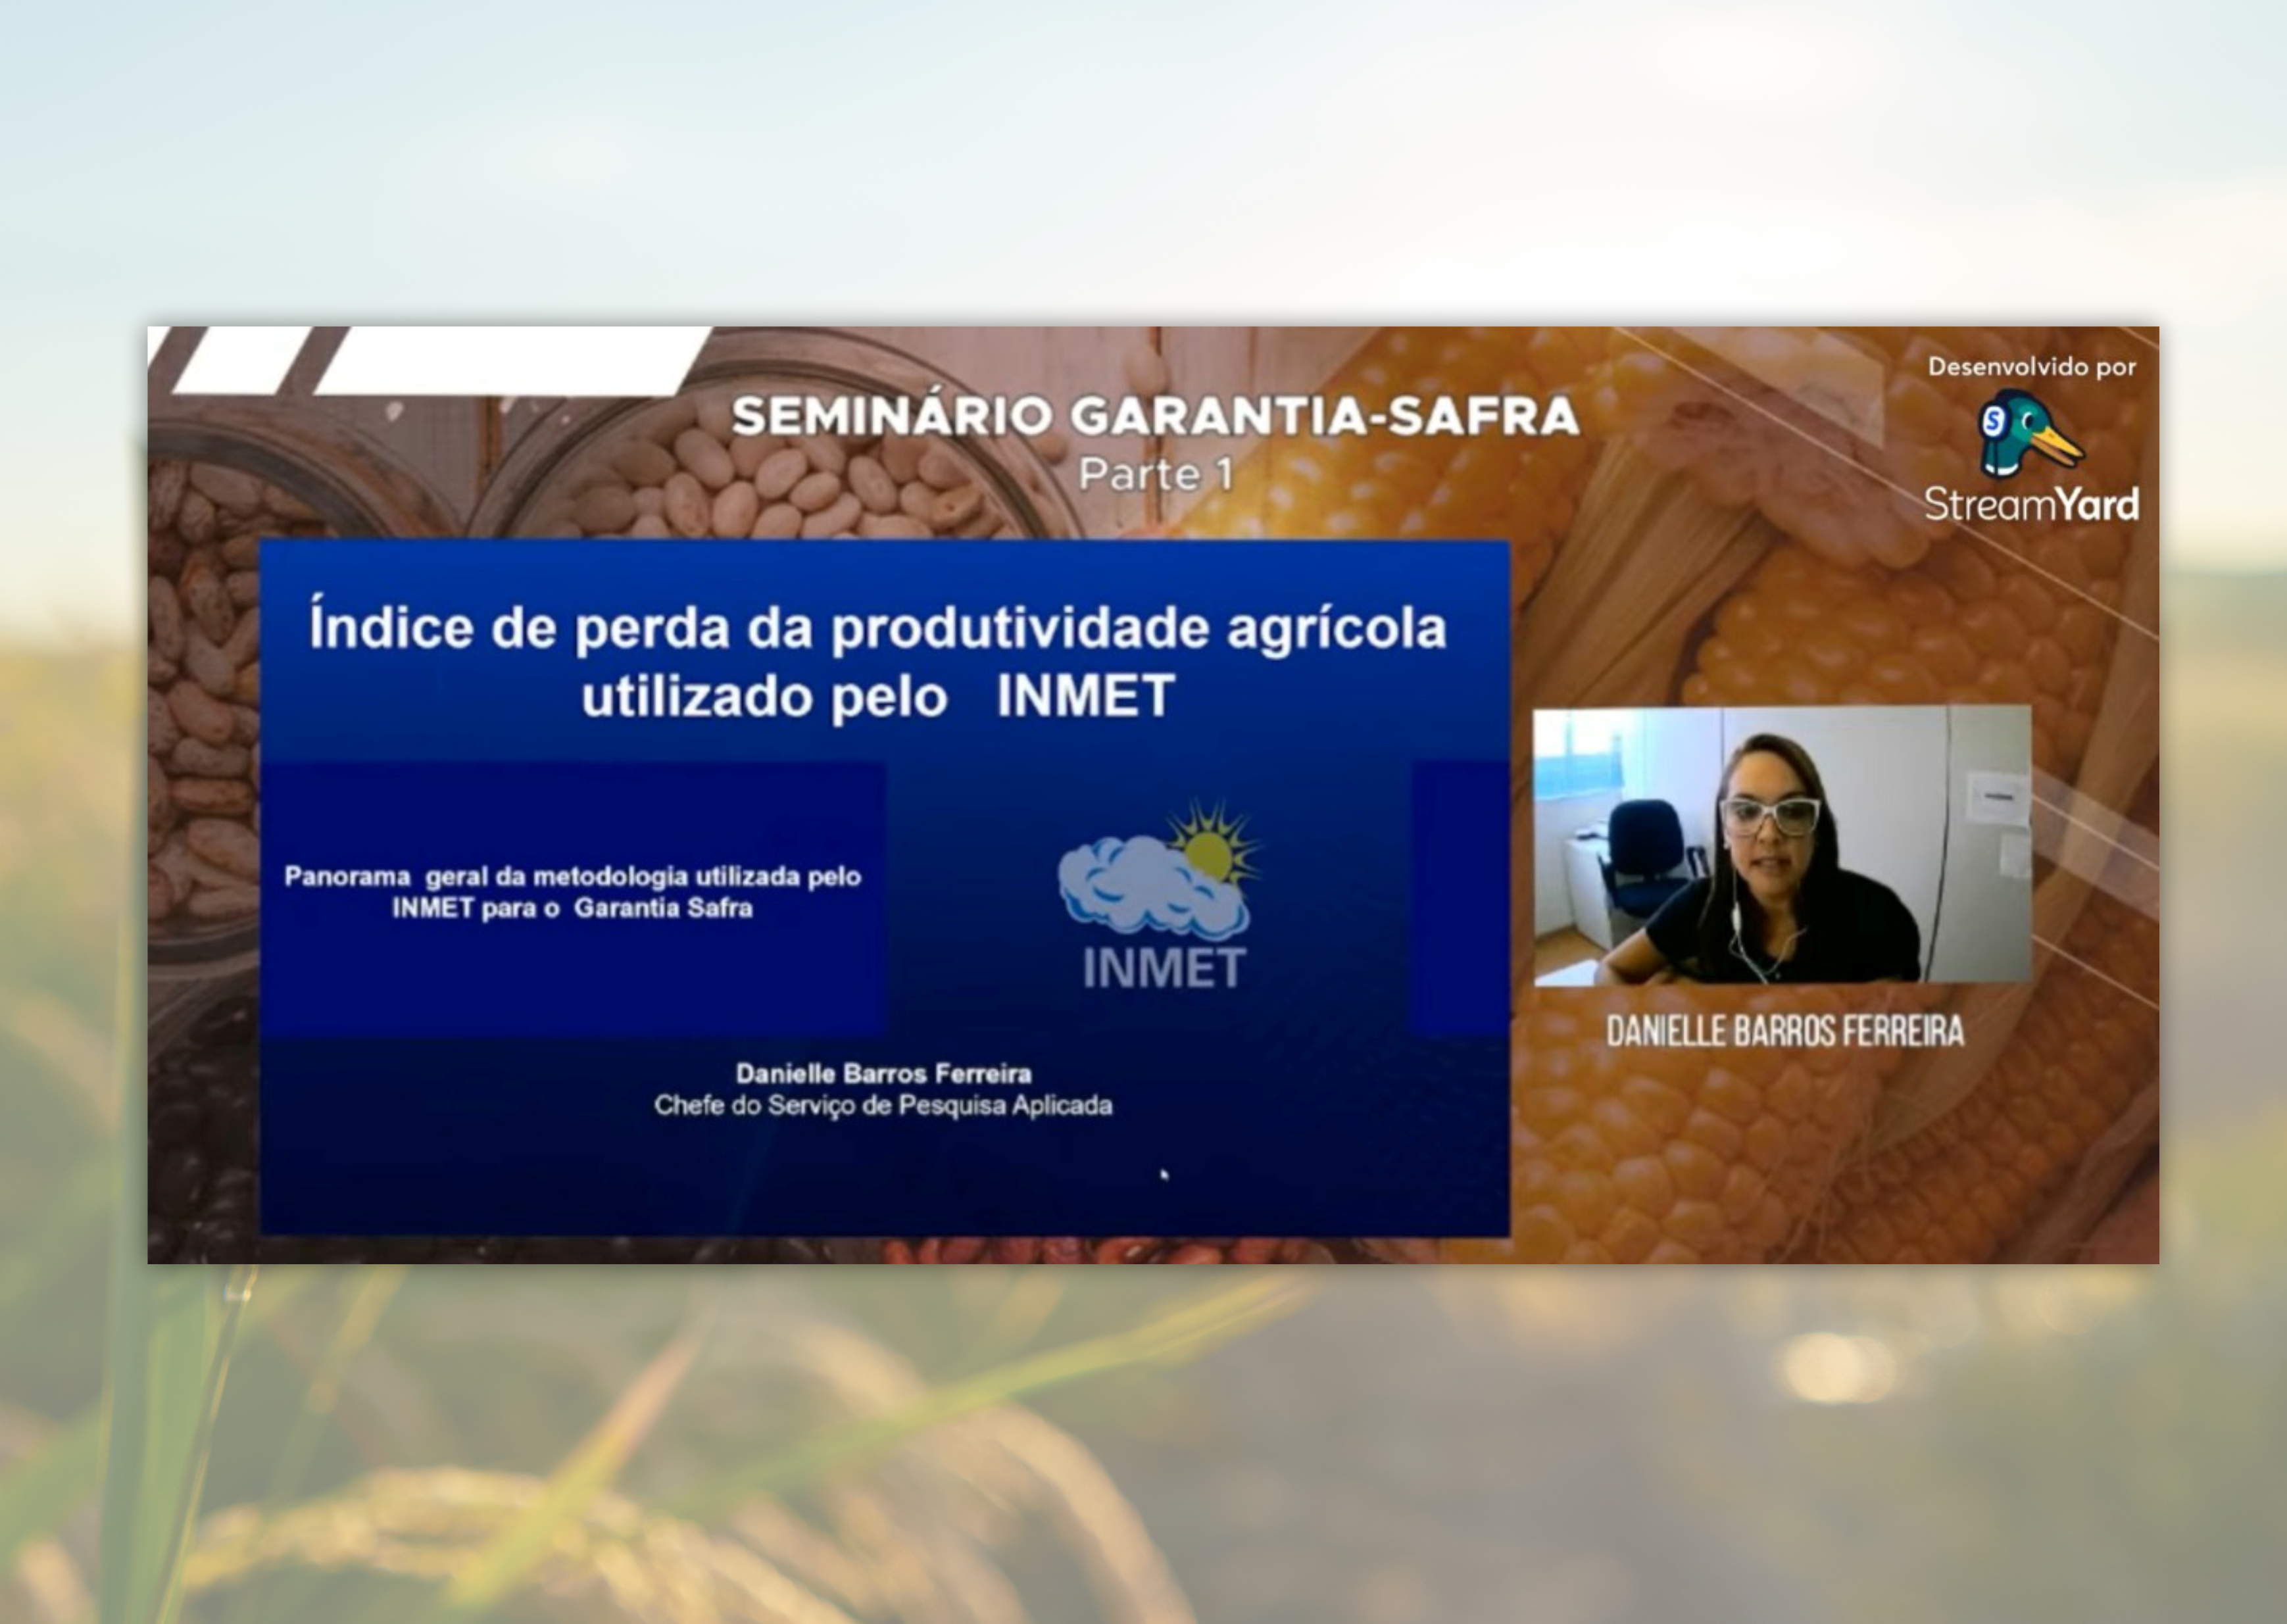 Meteorologista do INMET participa de seminário virtual sobre o Programa Garantia-Safra.